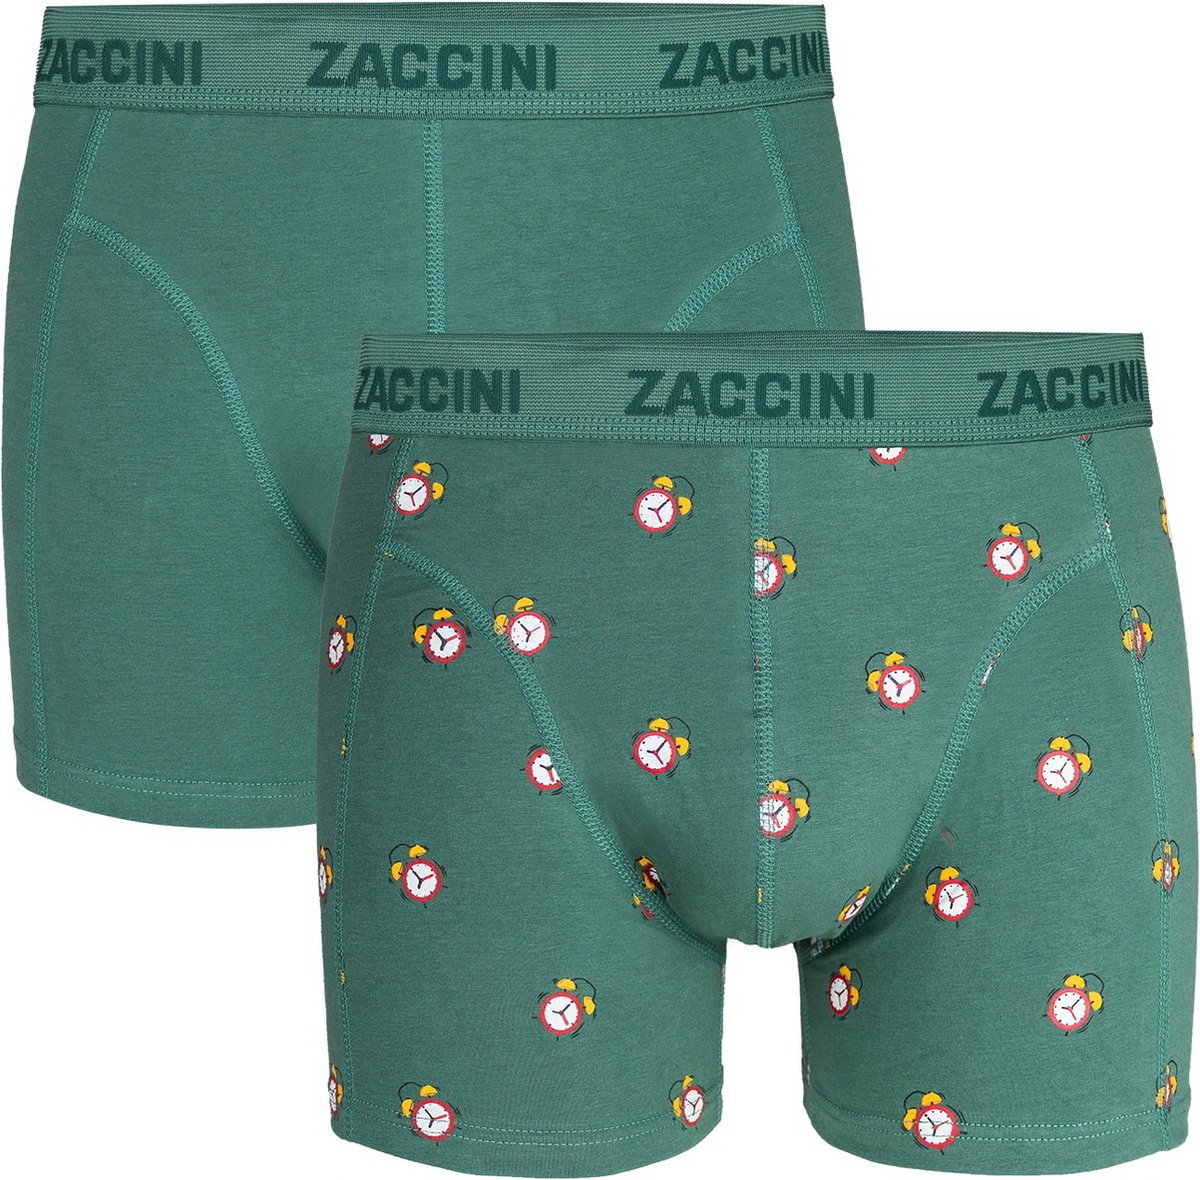 Zaccini - 2-Pack Boxershorts - Good Morning - Wekker - Groen